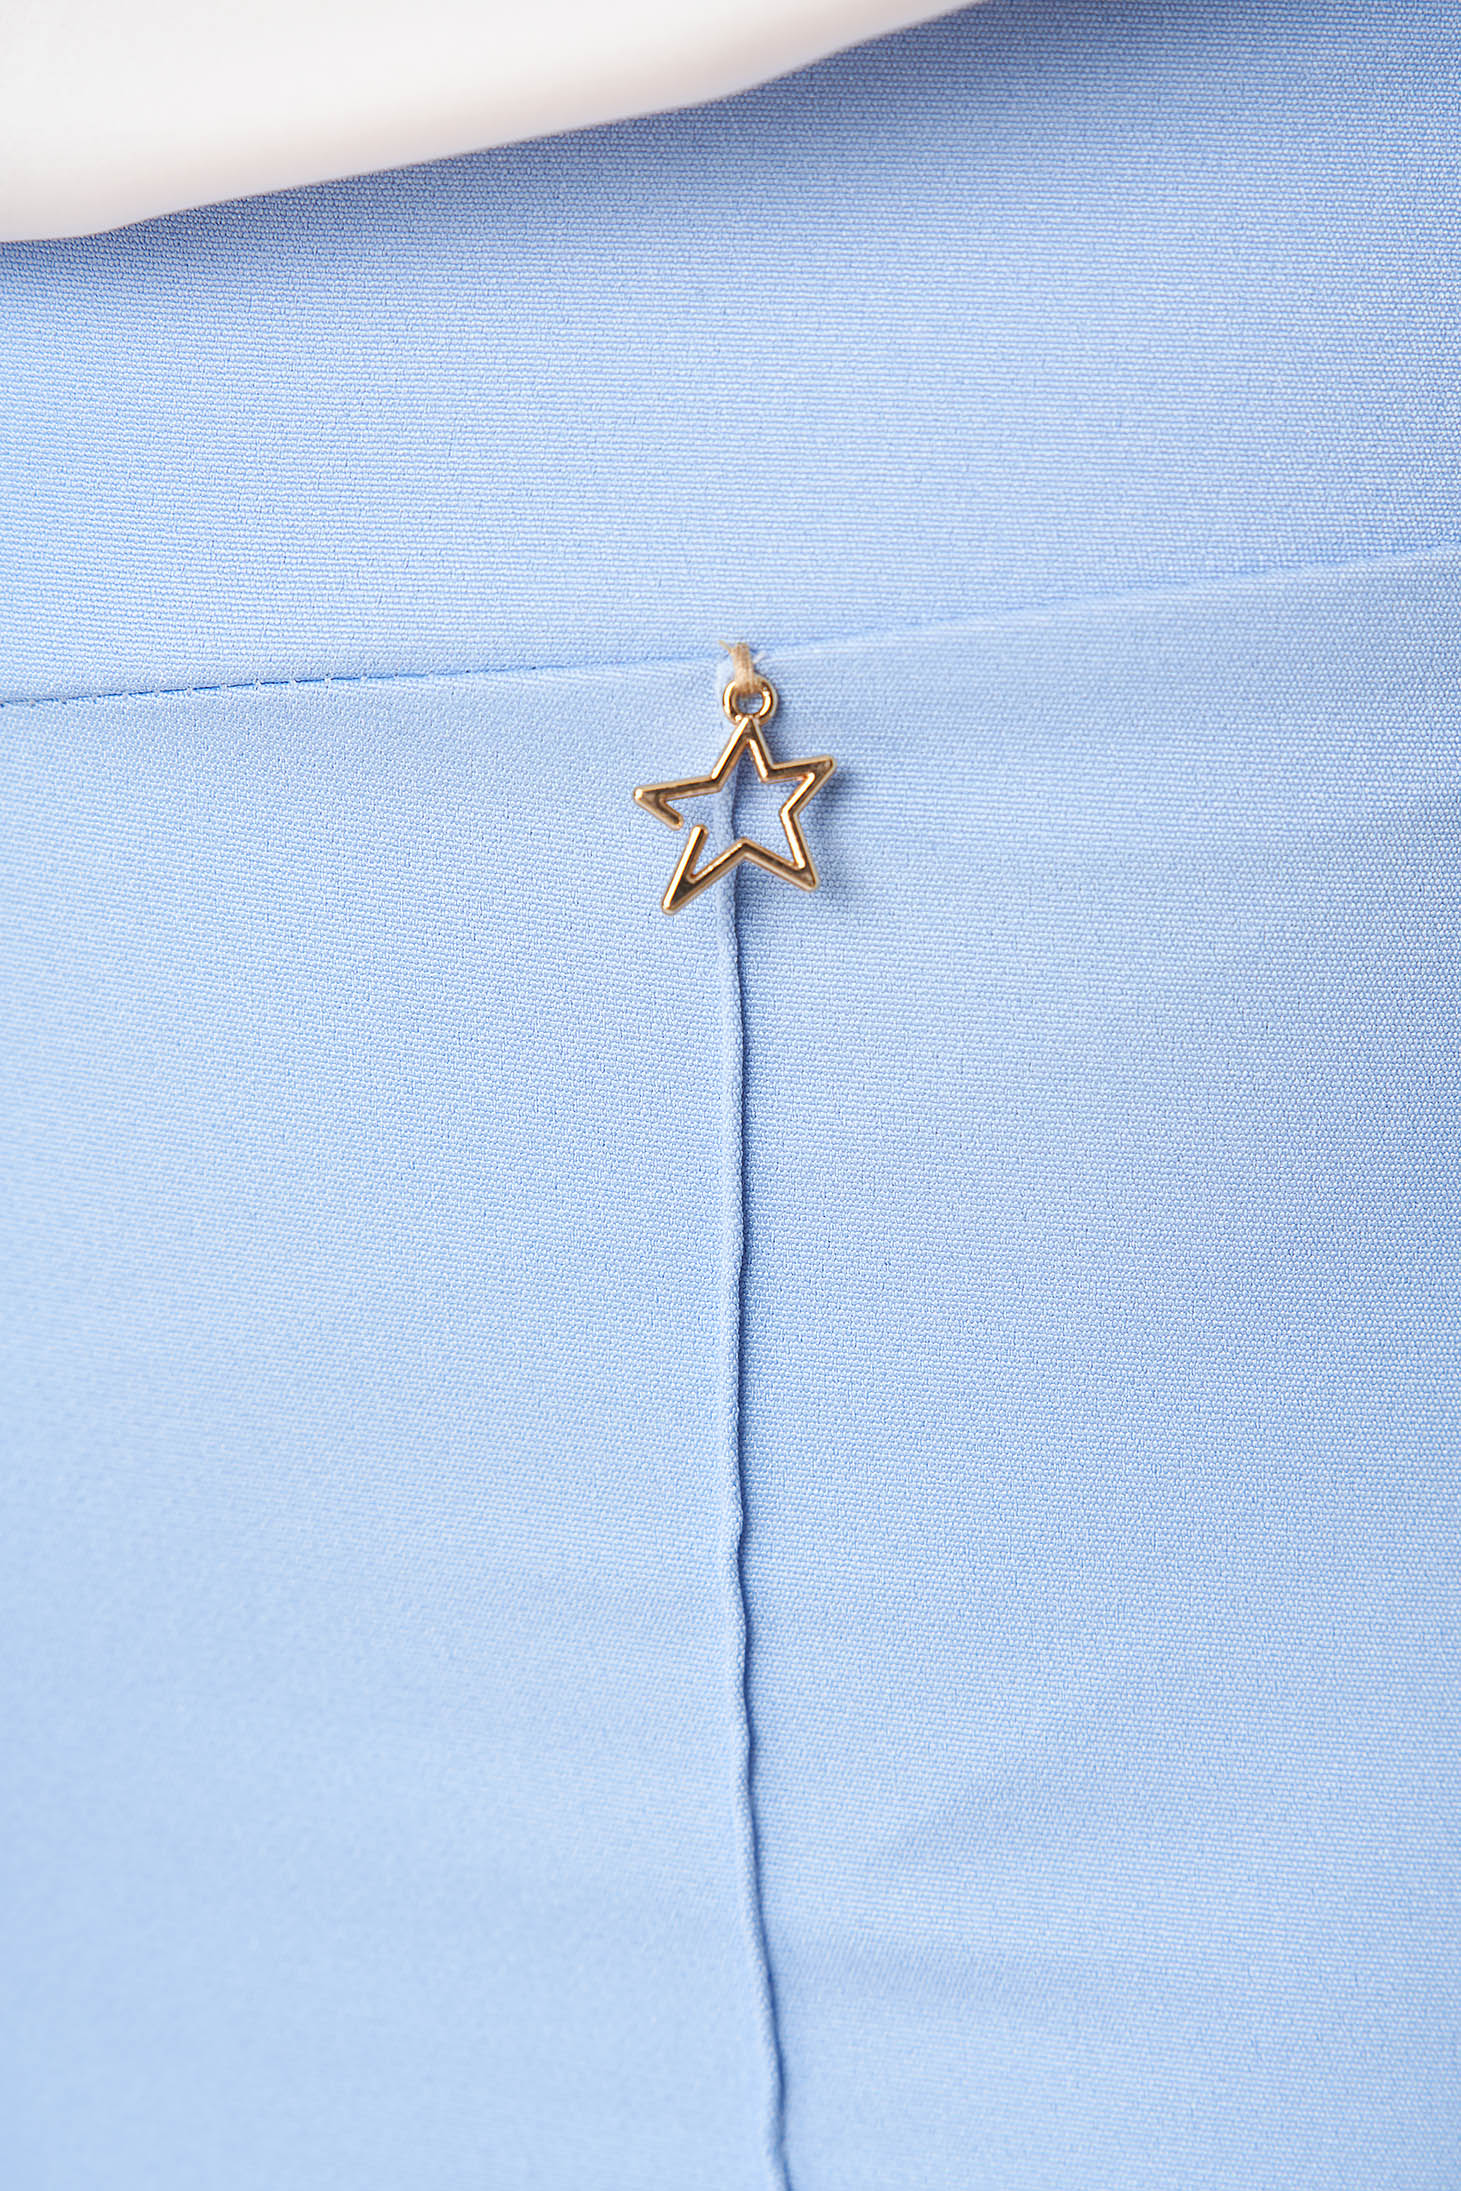 Pantaloni din stofa usor elastica albastru-deschis lungi evazati cu talie inalta - StarShinerS 6 - StarShinerS.ro